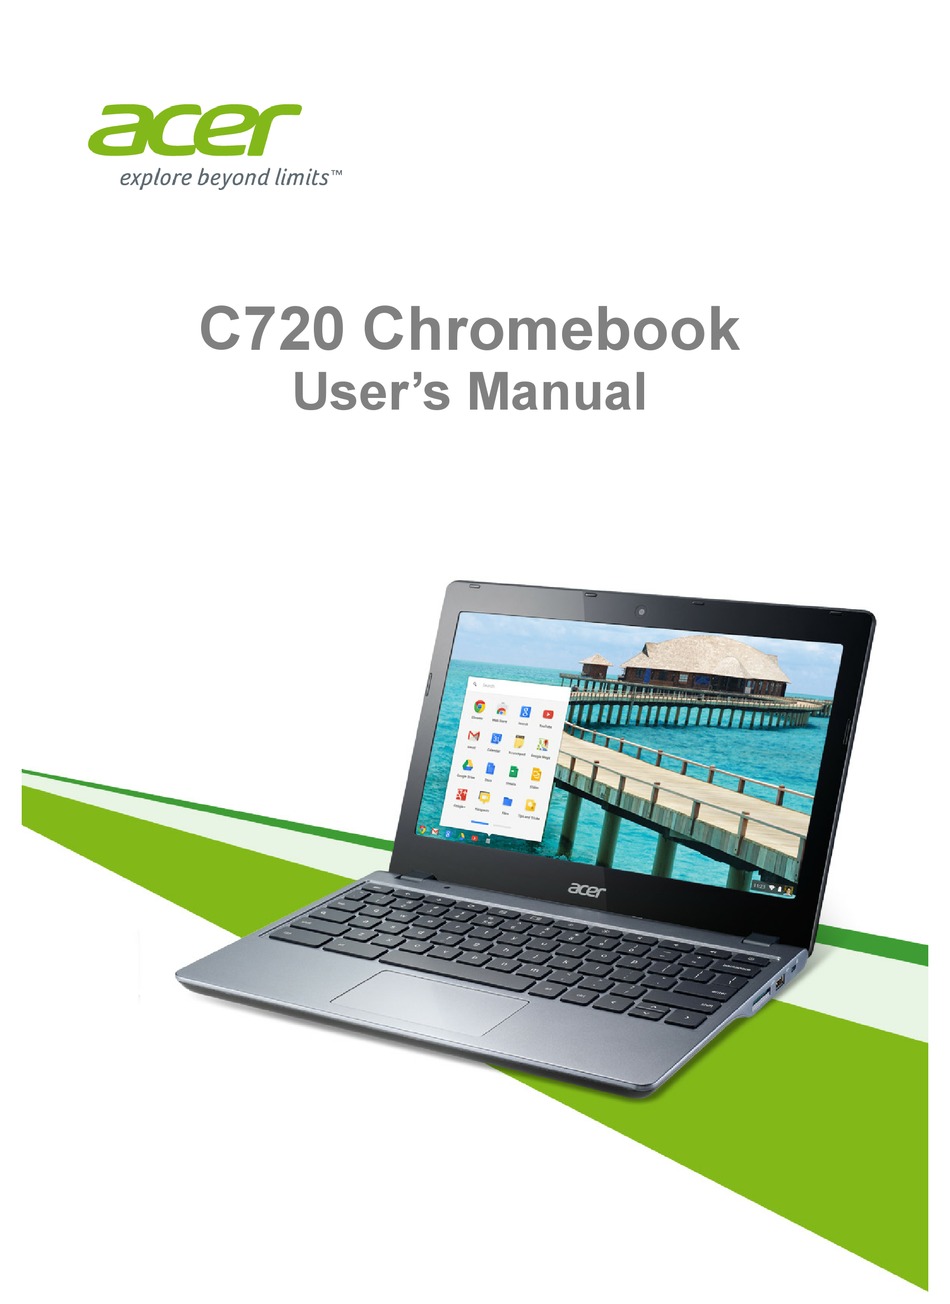 acer c720 chromebook software download